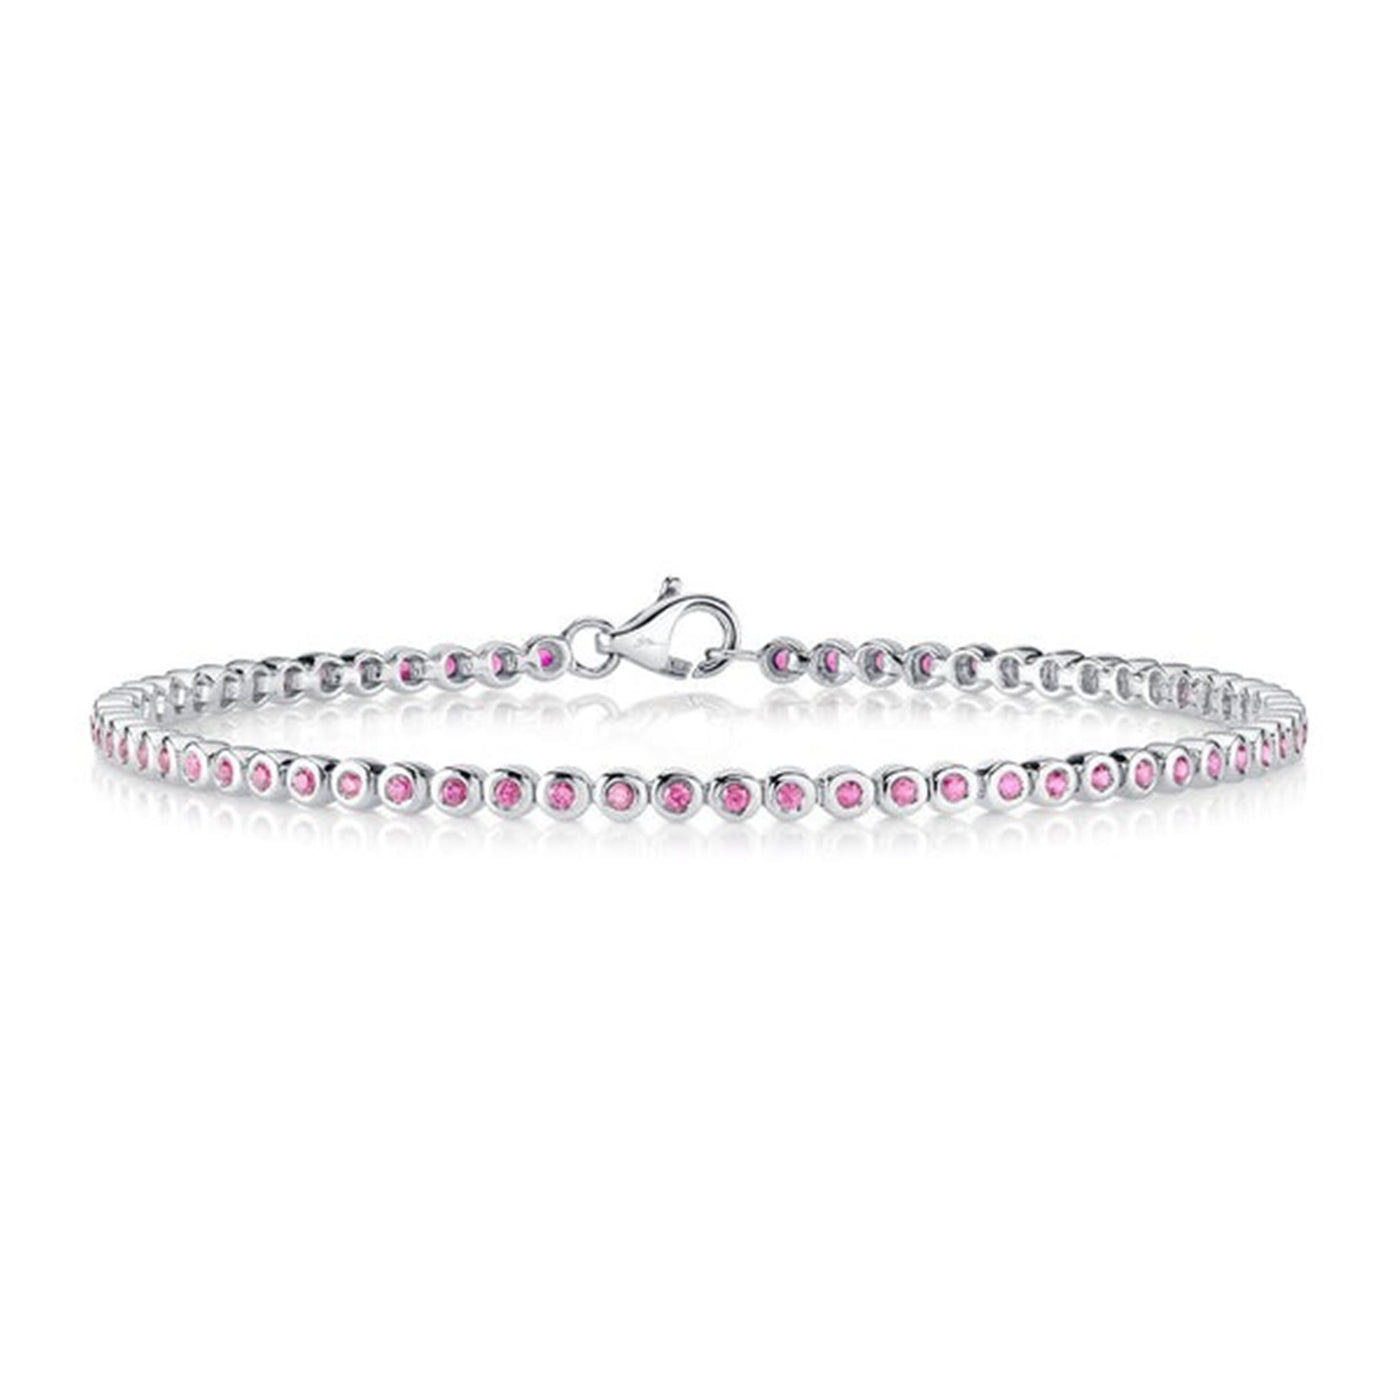 Shy Creation 14K White Gold 7" Bezel Set Tennis Style Bracelet Featuring Pink Sapphires